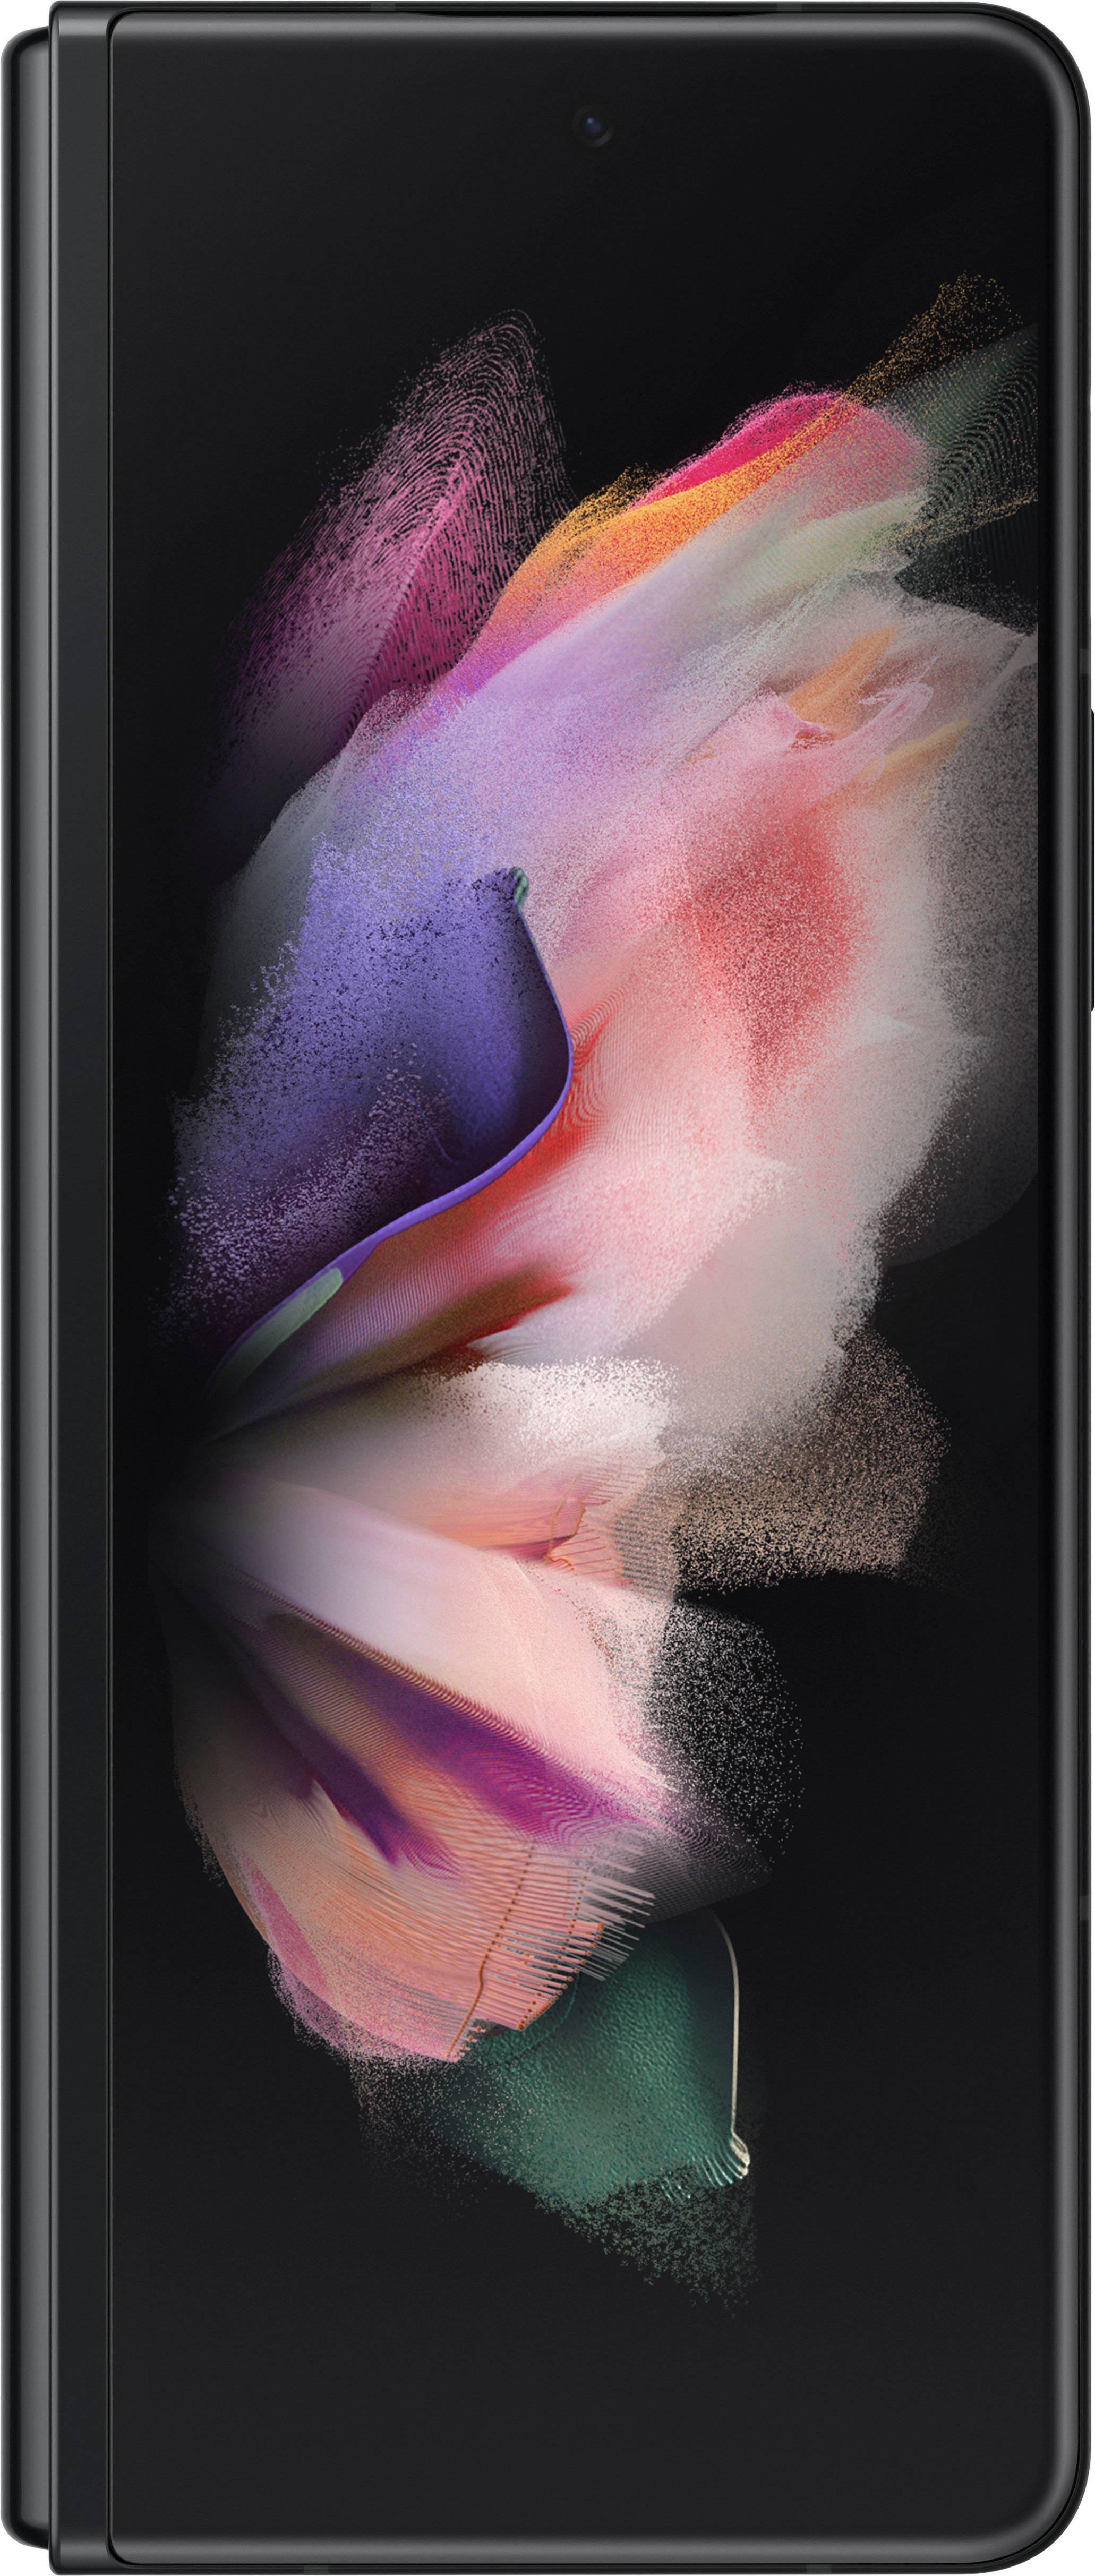 Samsung - Geek Squad Certified Refurbished Galaxy Z Fold3 5G 256GB (Unlocked) - Phantom Black